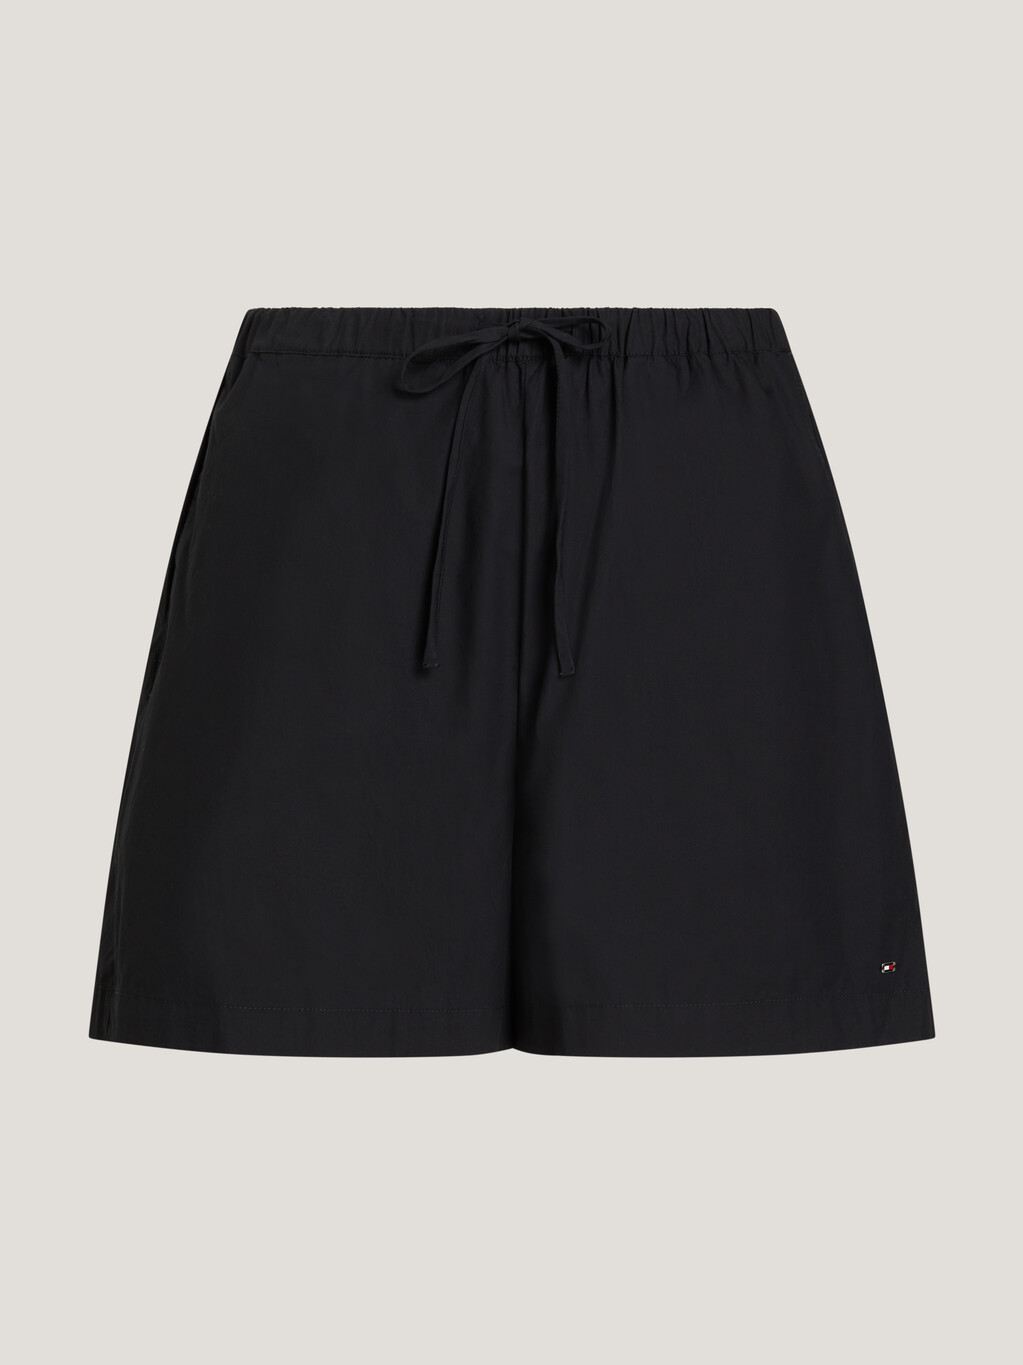 Drawstring Shorts, Black, hi-res